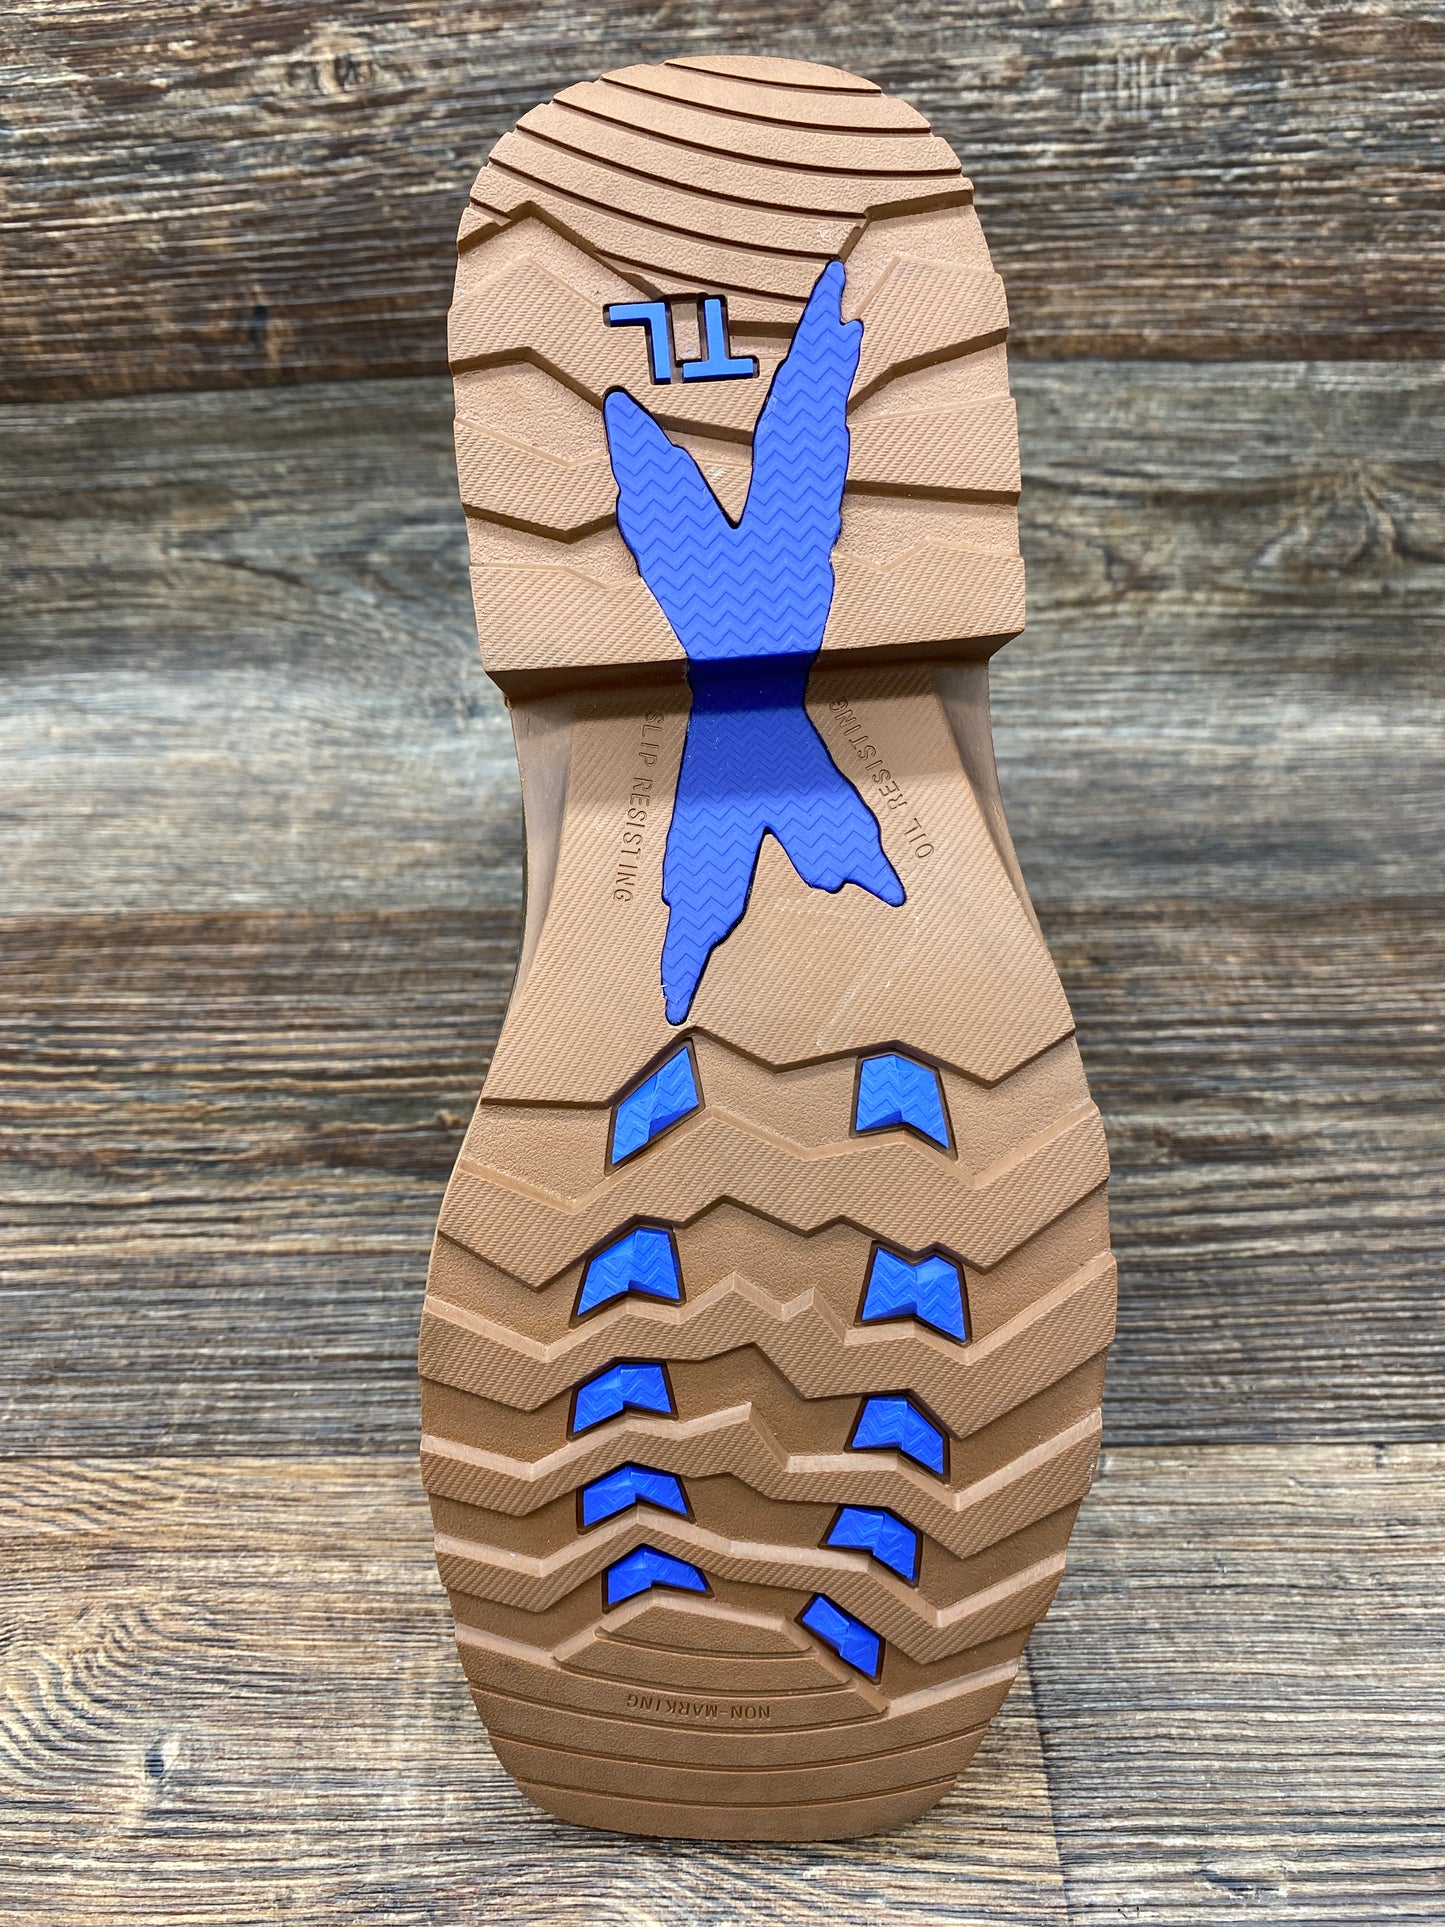 tw3421 Women's Lumen Composite Toe Work Boot by Tony Lama